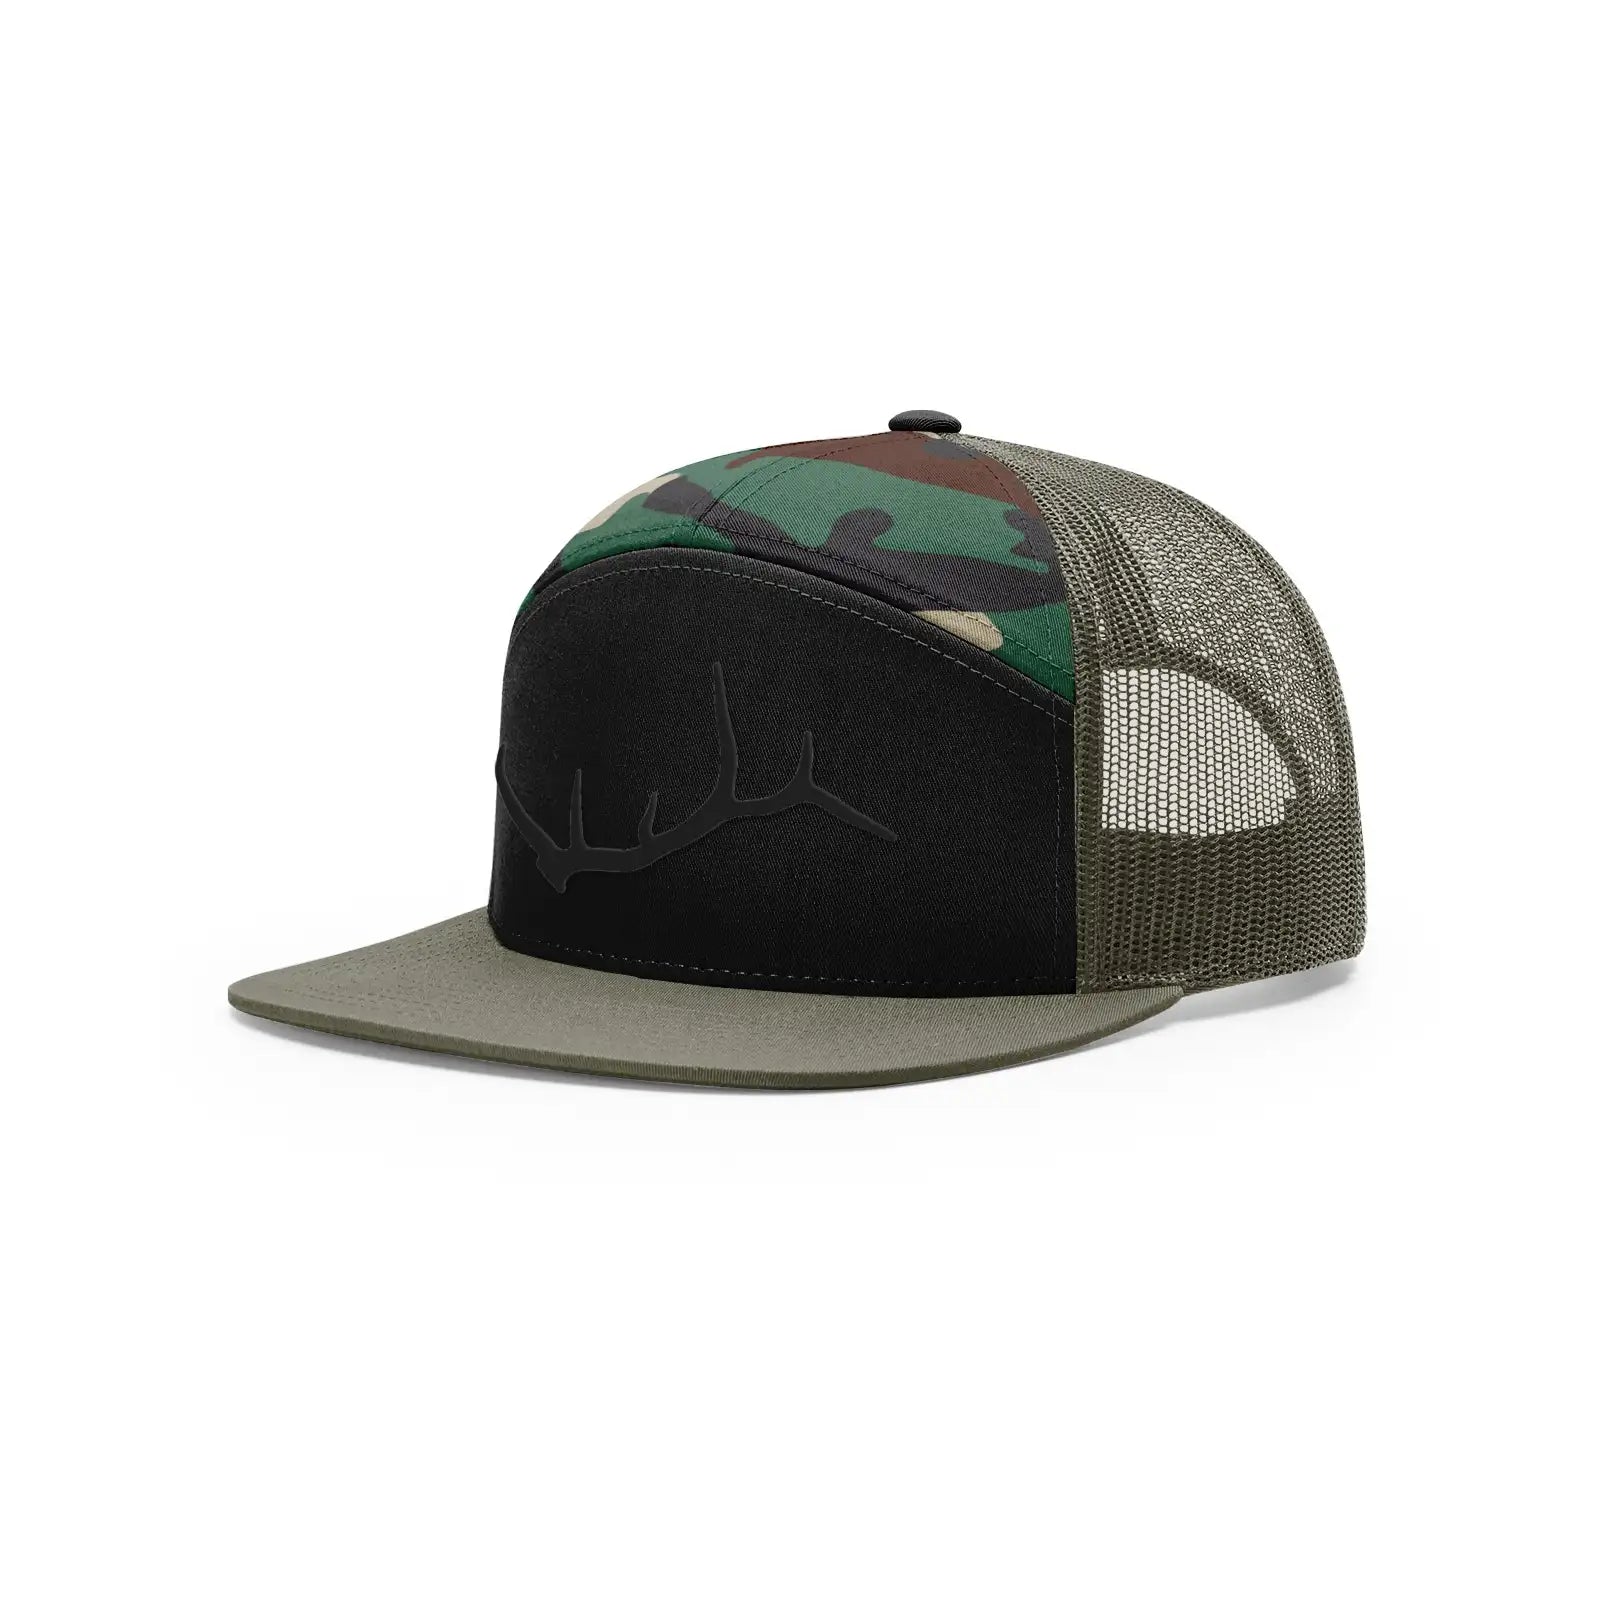 Premium cap with elk antler in camo for hunters and outdoorsmen